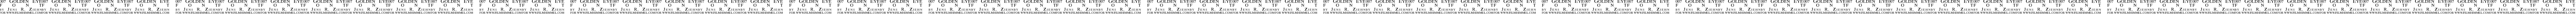 Пример написания шрифтом 007 GoldenEye текста на украинском